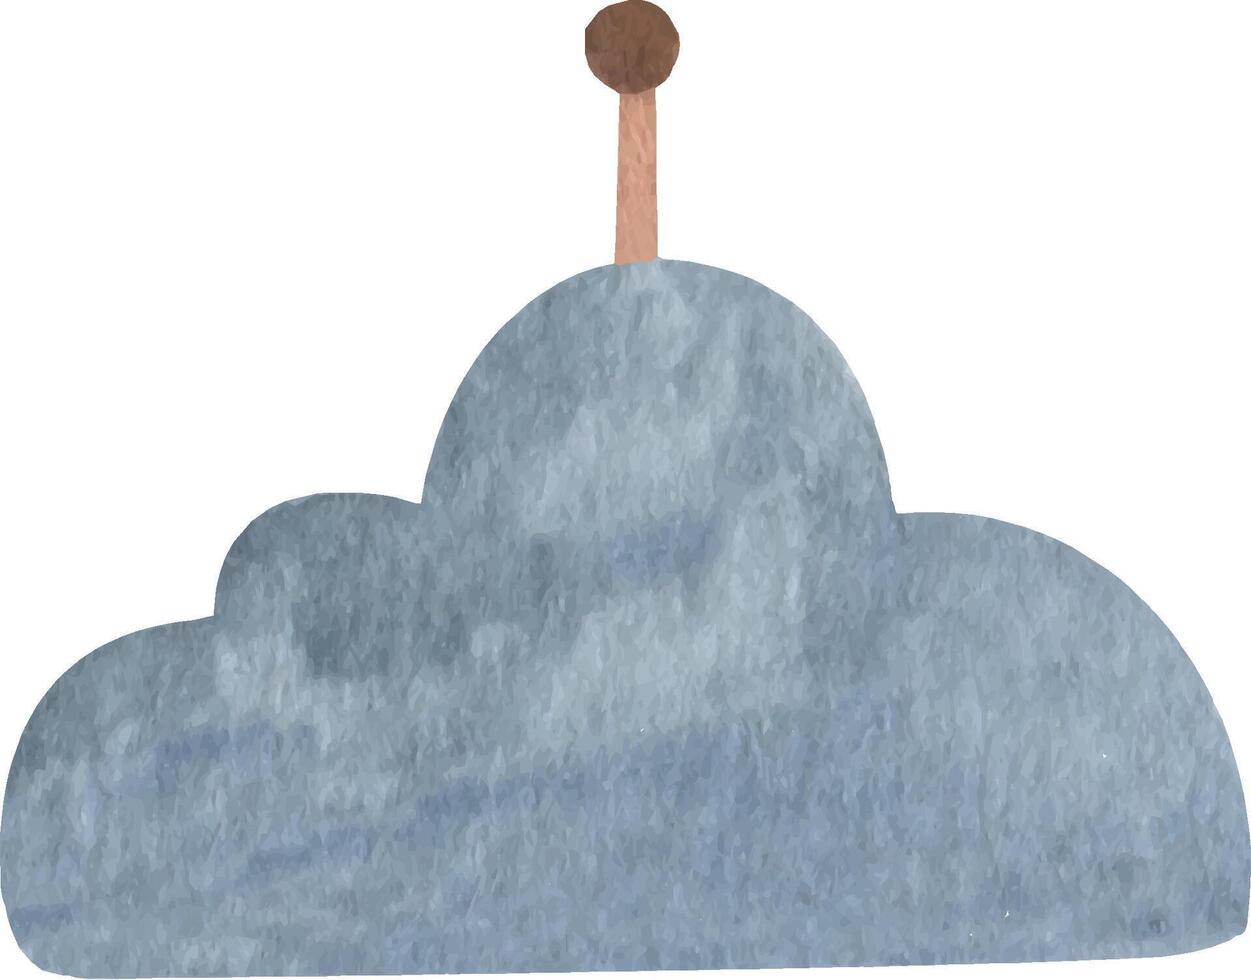 Boho nursery crib toy watercolor clipart with cloud. Wall decor bedroom vector